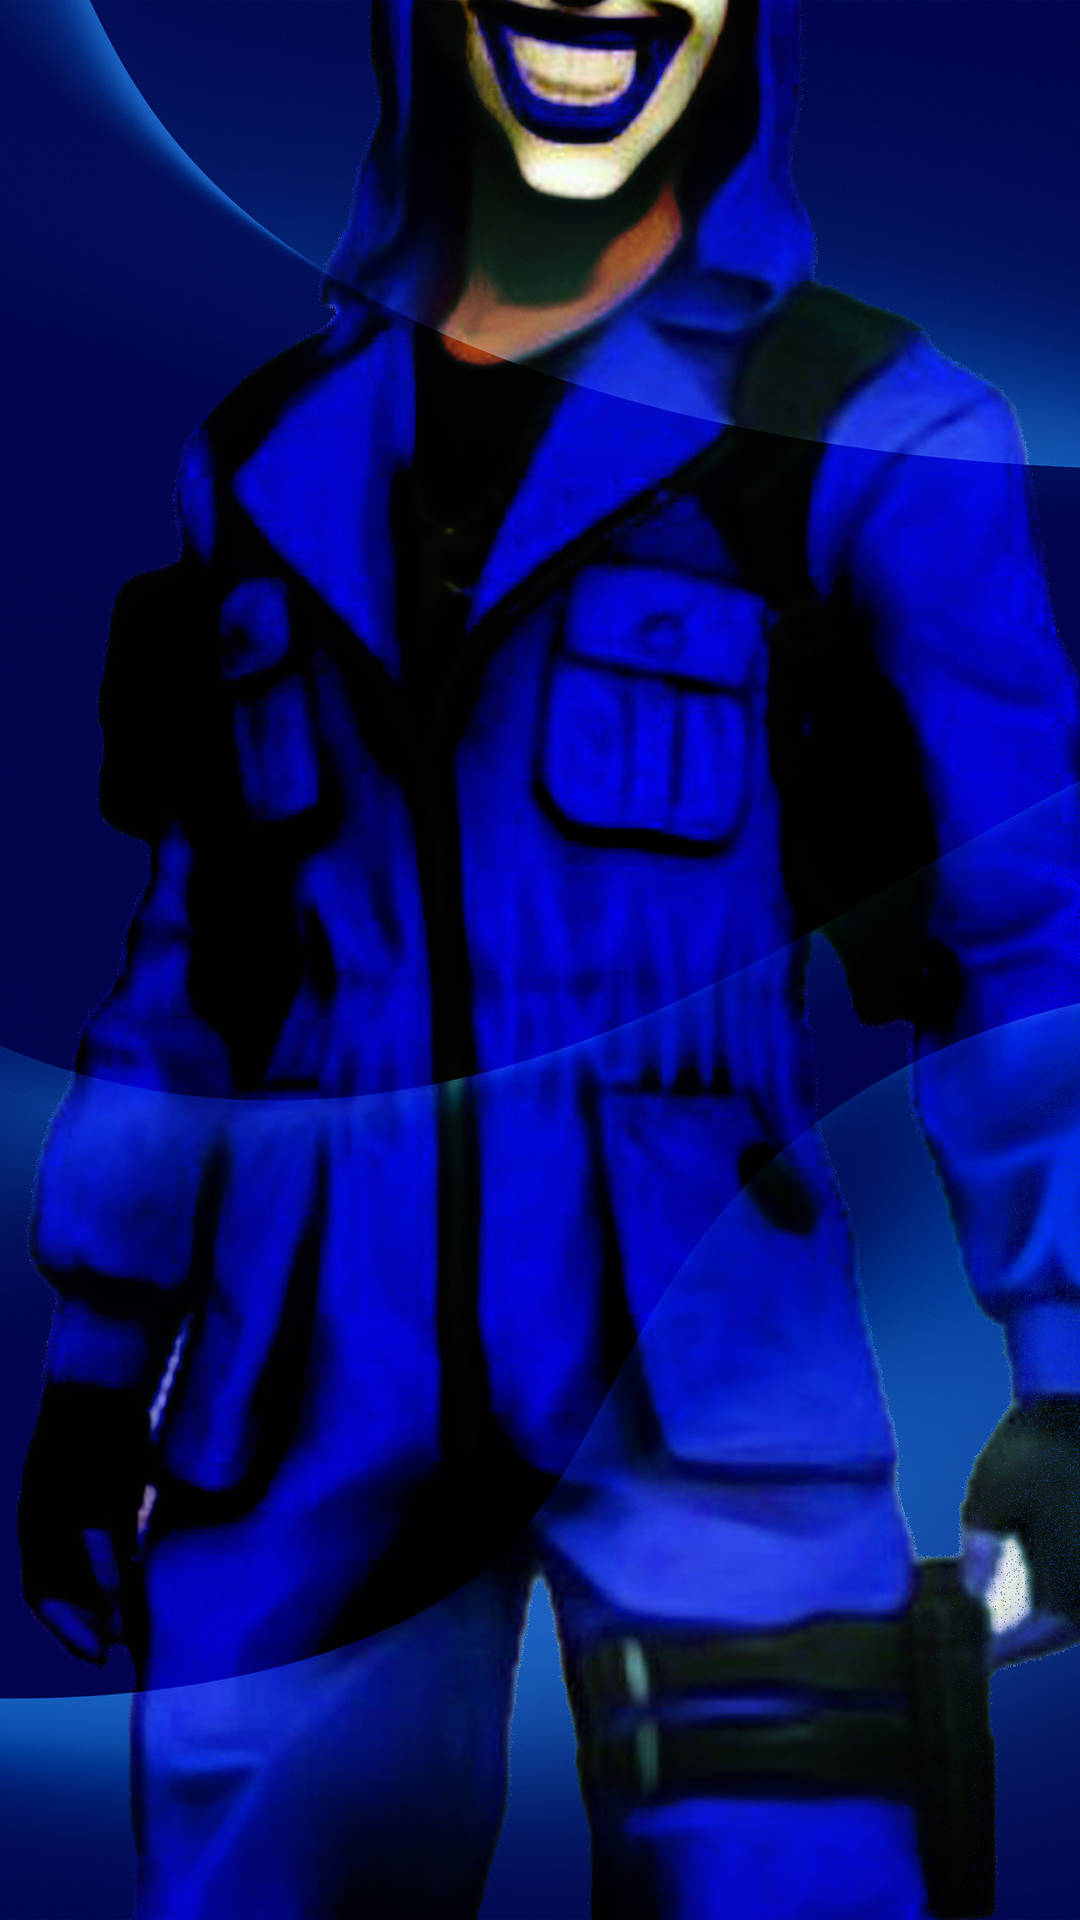 Smiling Blue Criminal Bundle Character Wallpaper